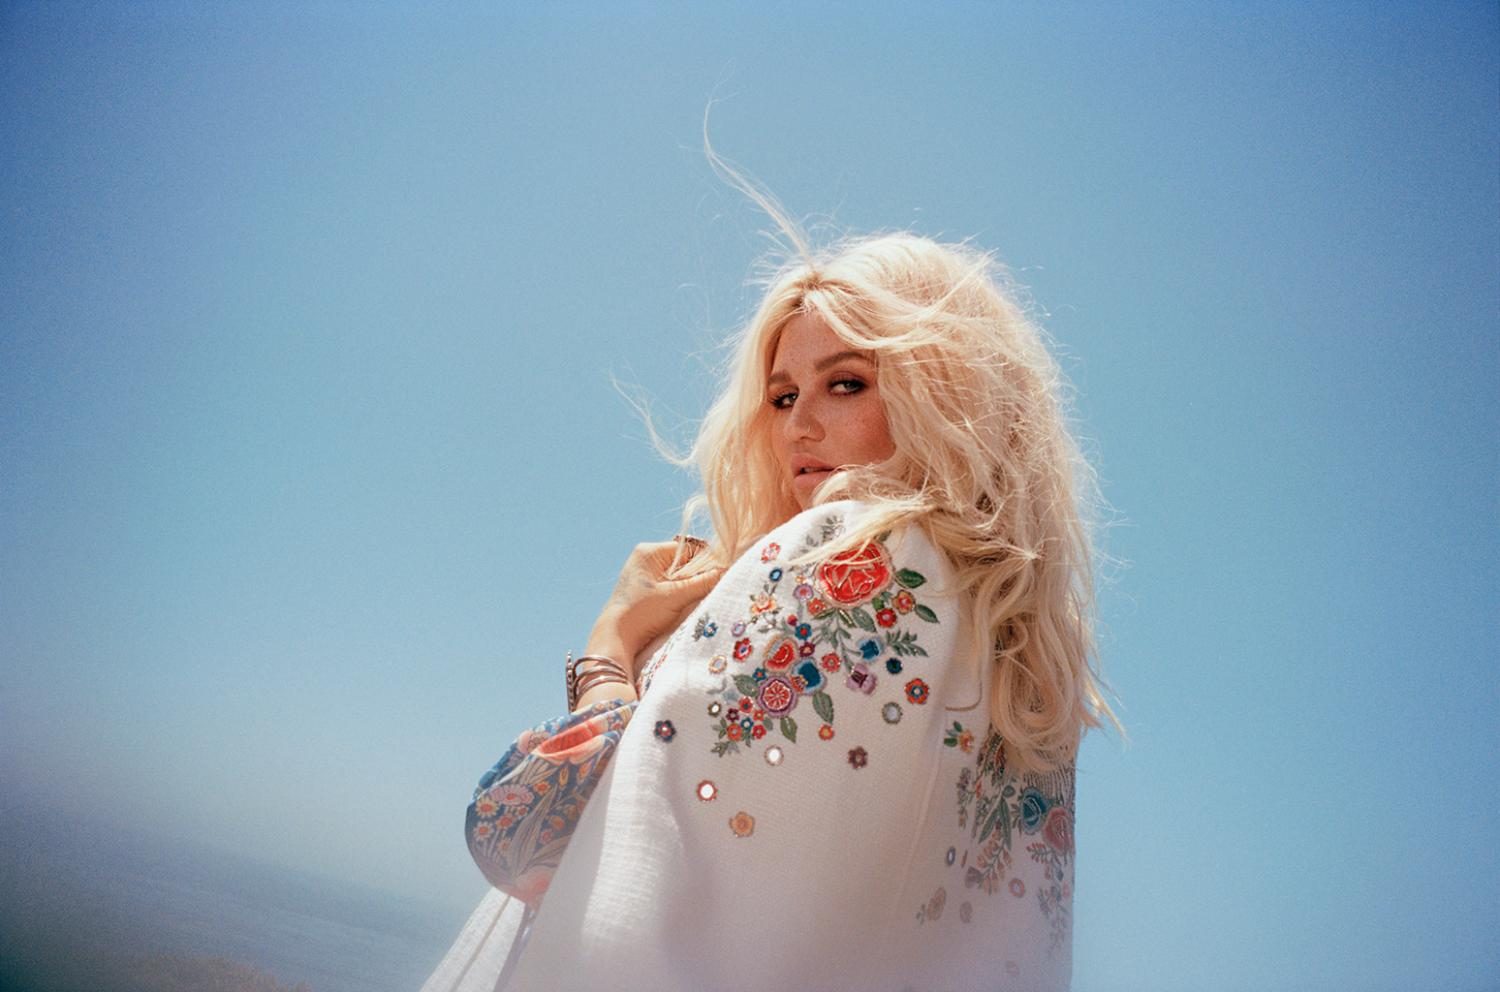 Kesha returns with new album “Rainbow” following sexual assault case